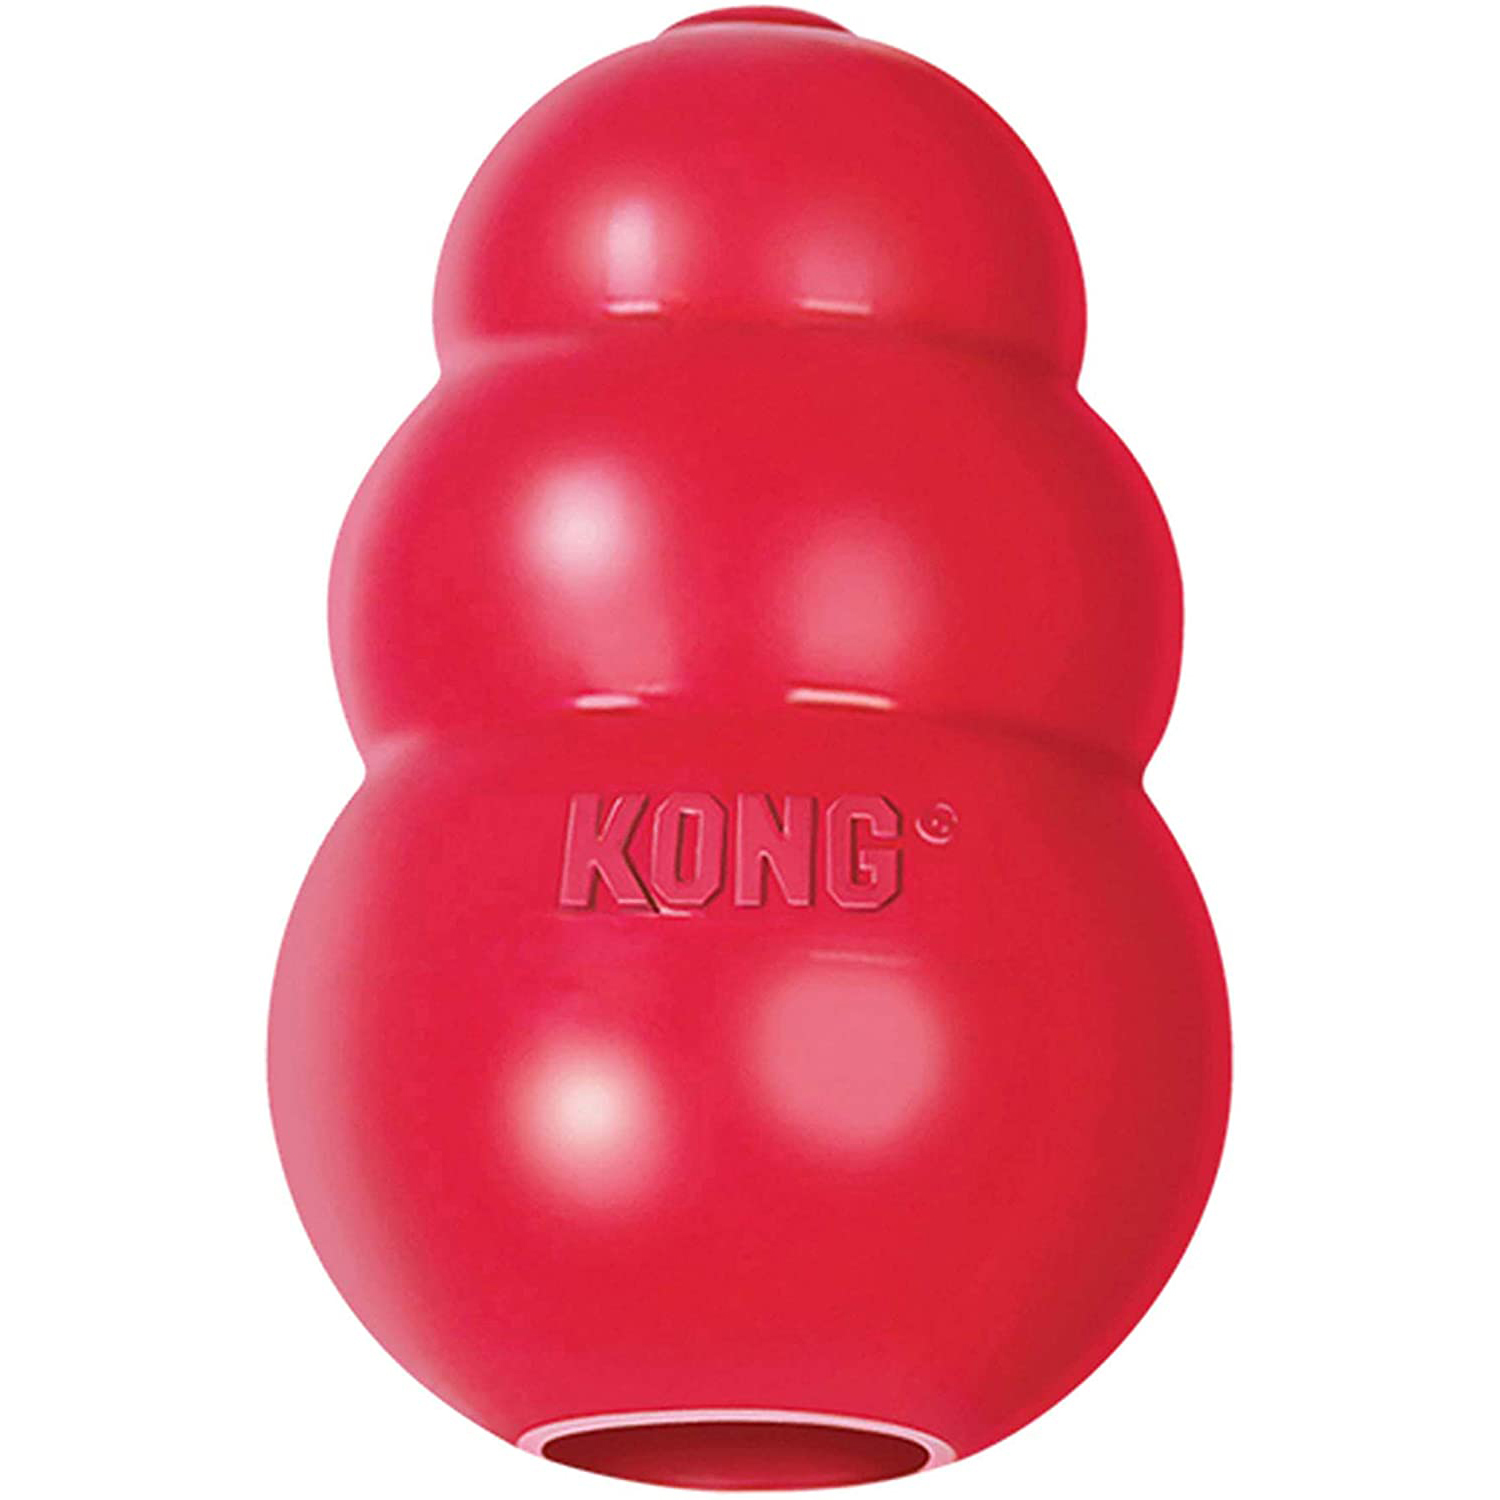 KONG Classic Dog Toy, Large